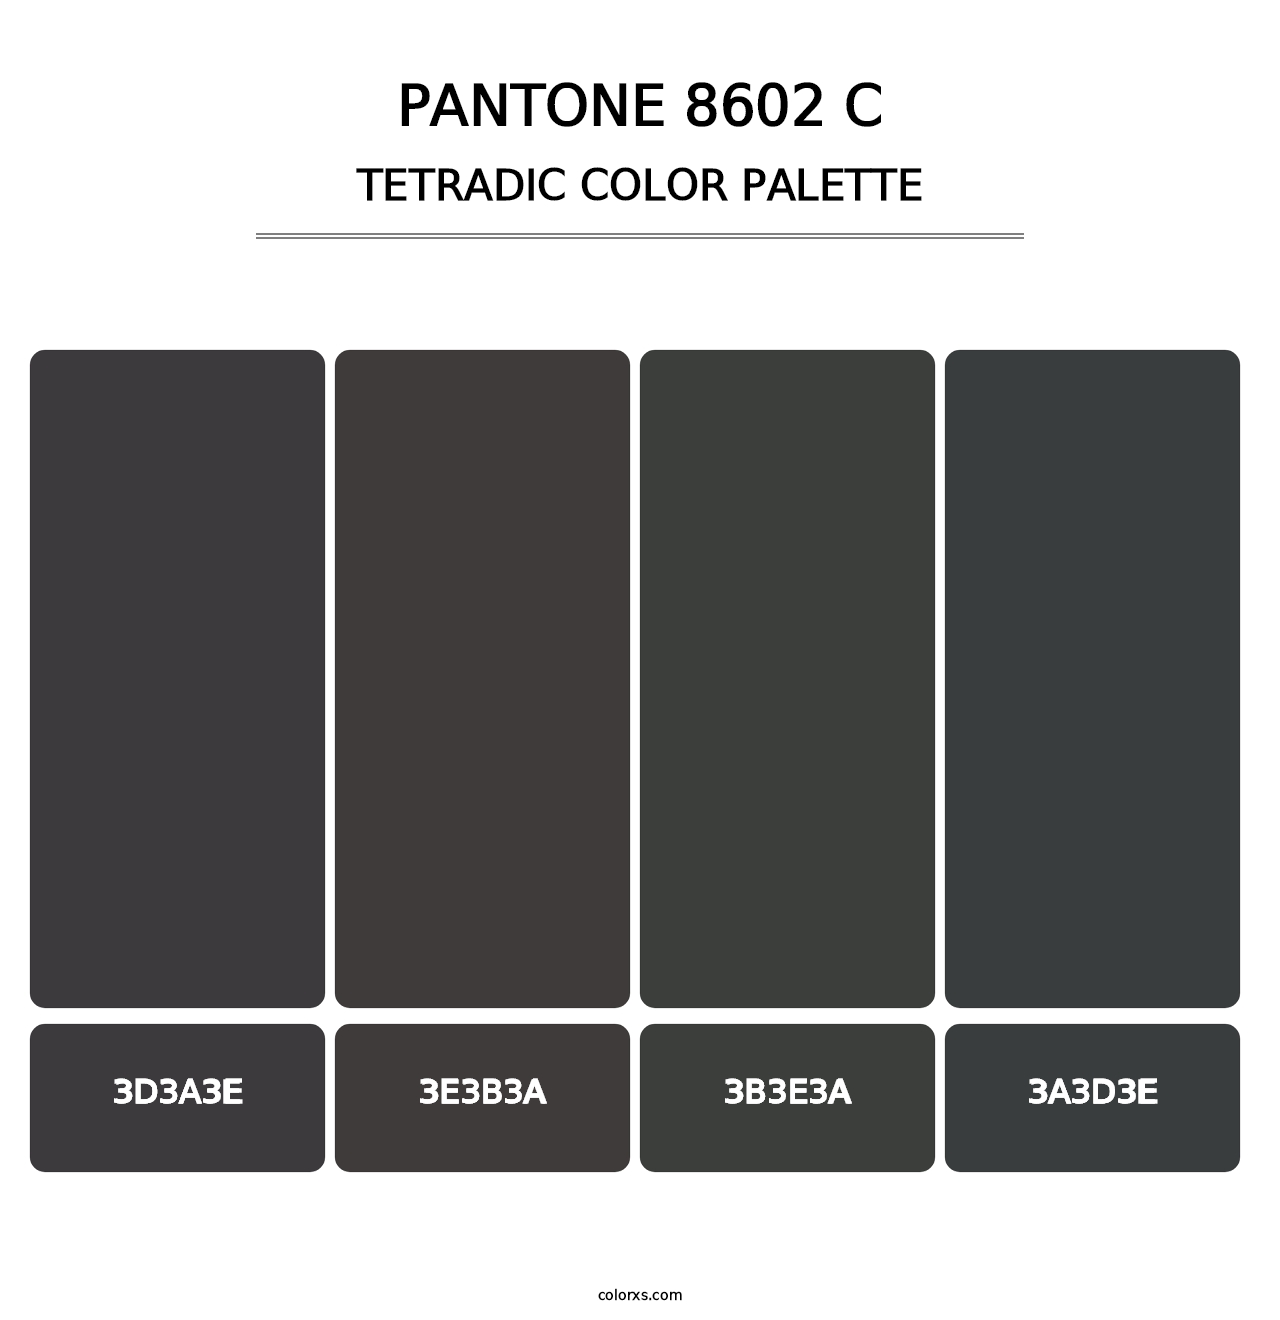 PANTONE 8602 C - Tetradic Color Palette